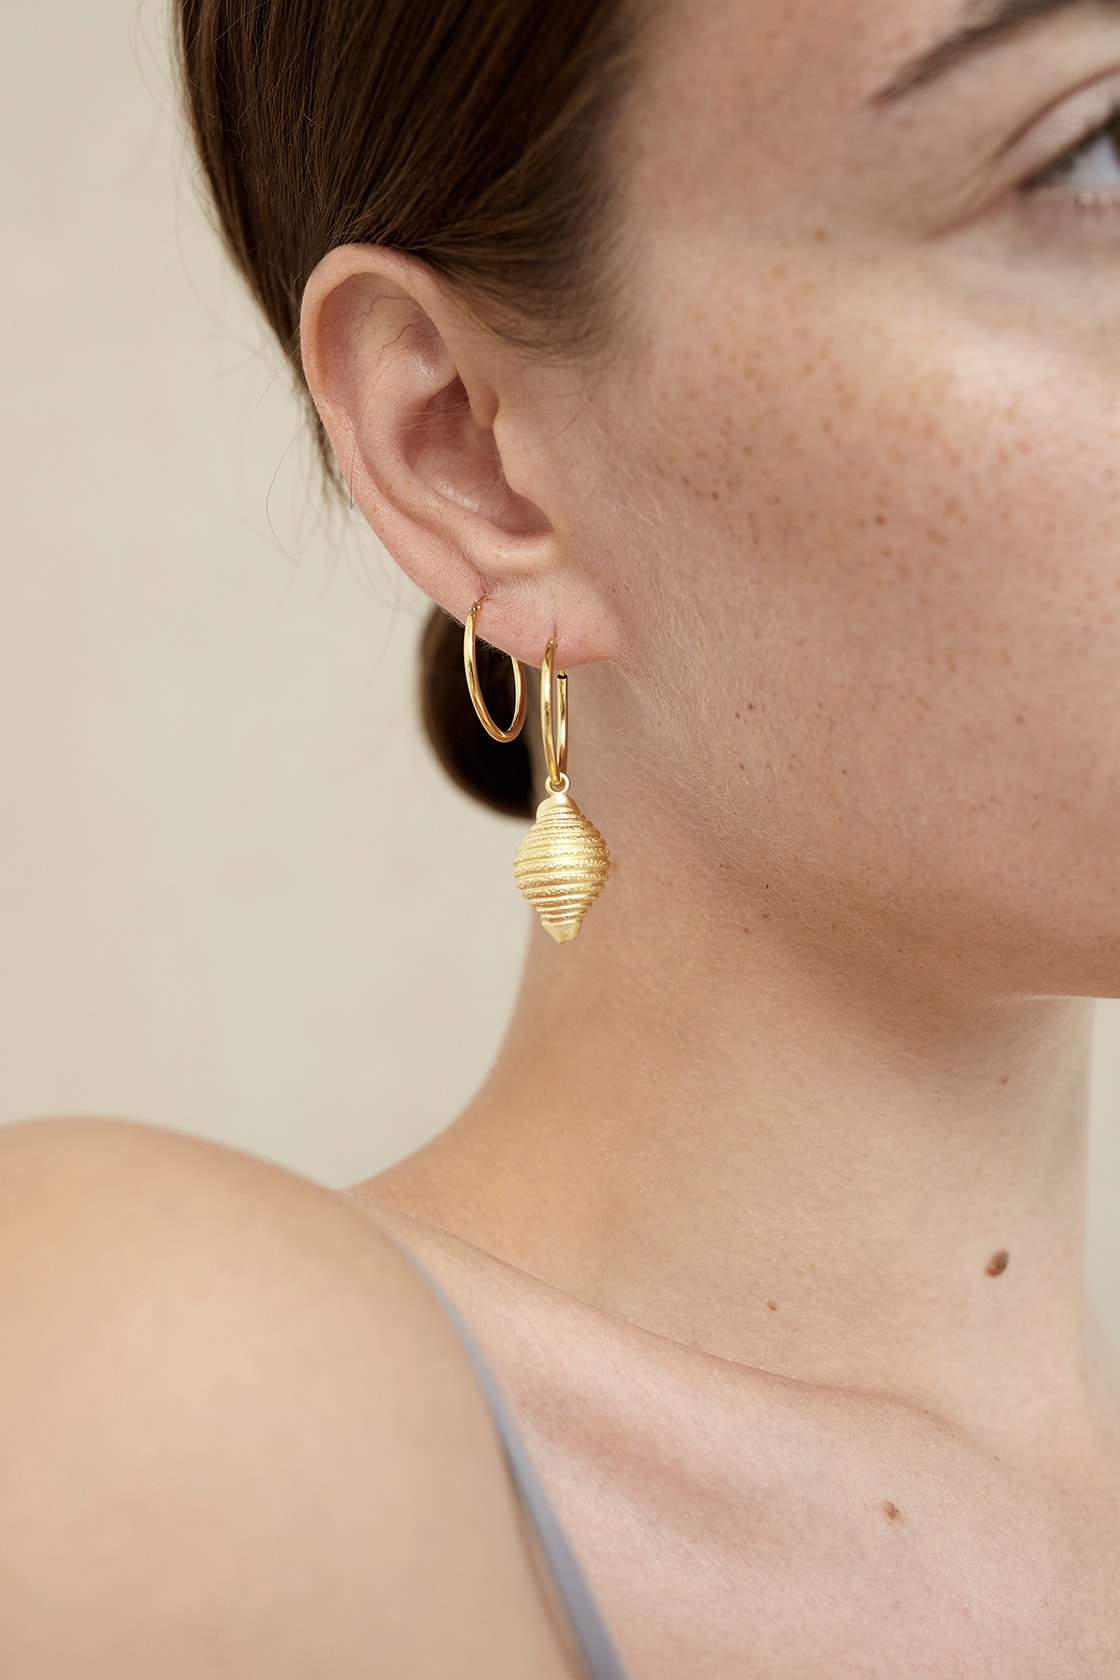 trine tuxen luisaviaromas jewelry collaboration earrings necklaces hair pin pasta